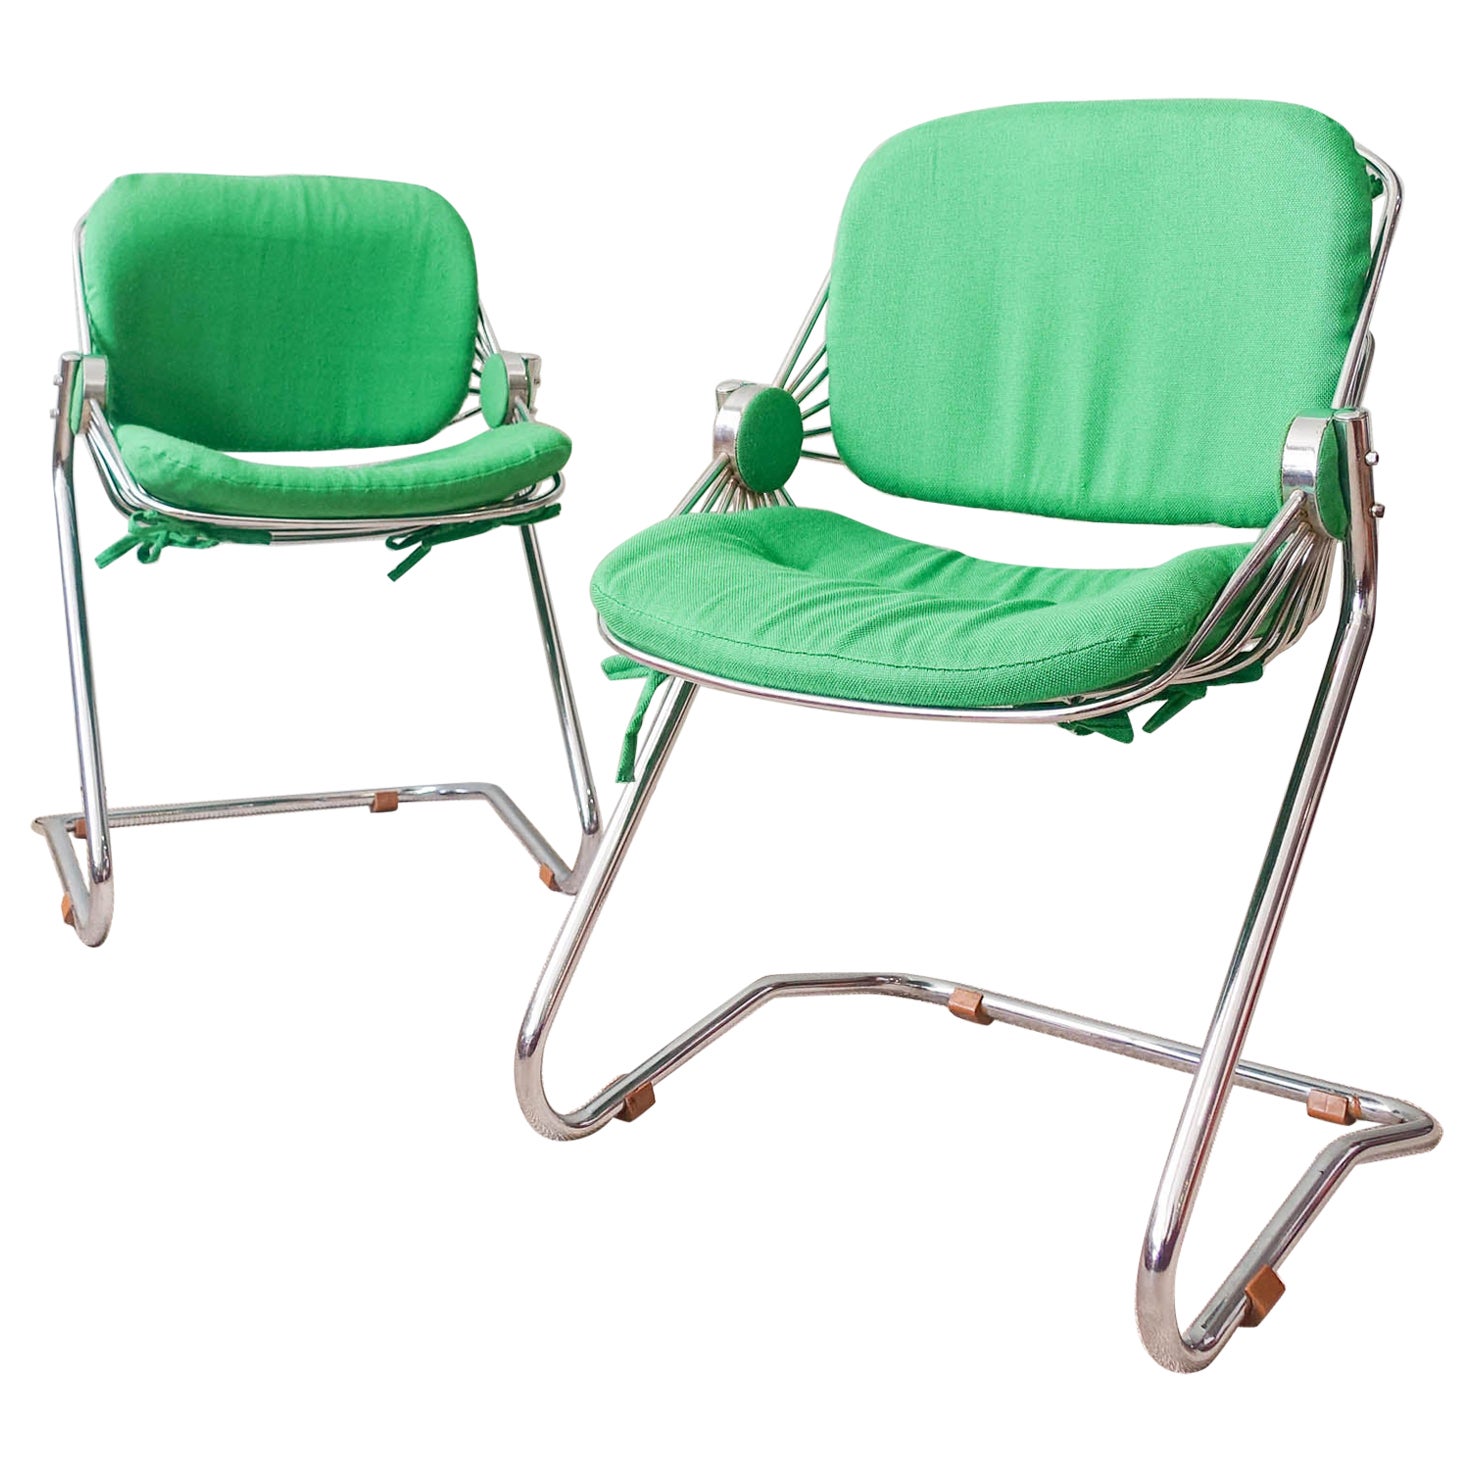 Pair of Italian Tubular Chrome Steel Dining Chairs, 1970s For Sale